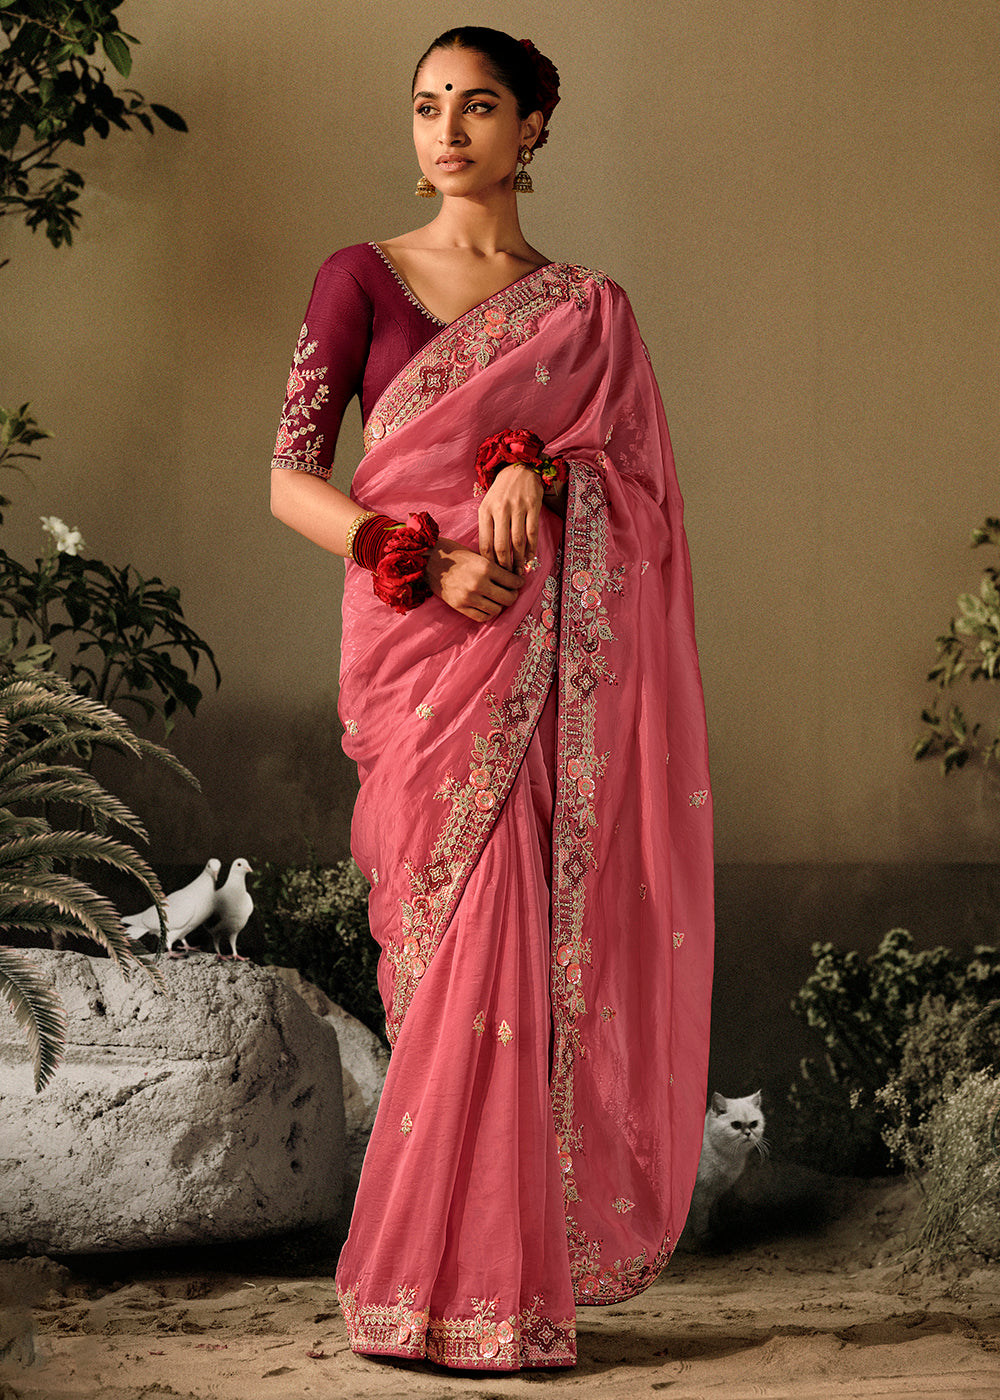 Buy Now Salmon Pink Khatli Work Embroidered Designer Wedding Saree Online in USA, UK, Canada & Worldwide at Empress Clothing. 